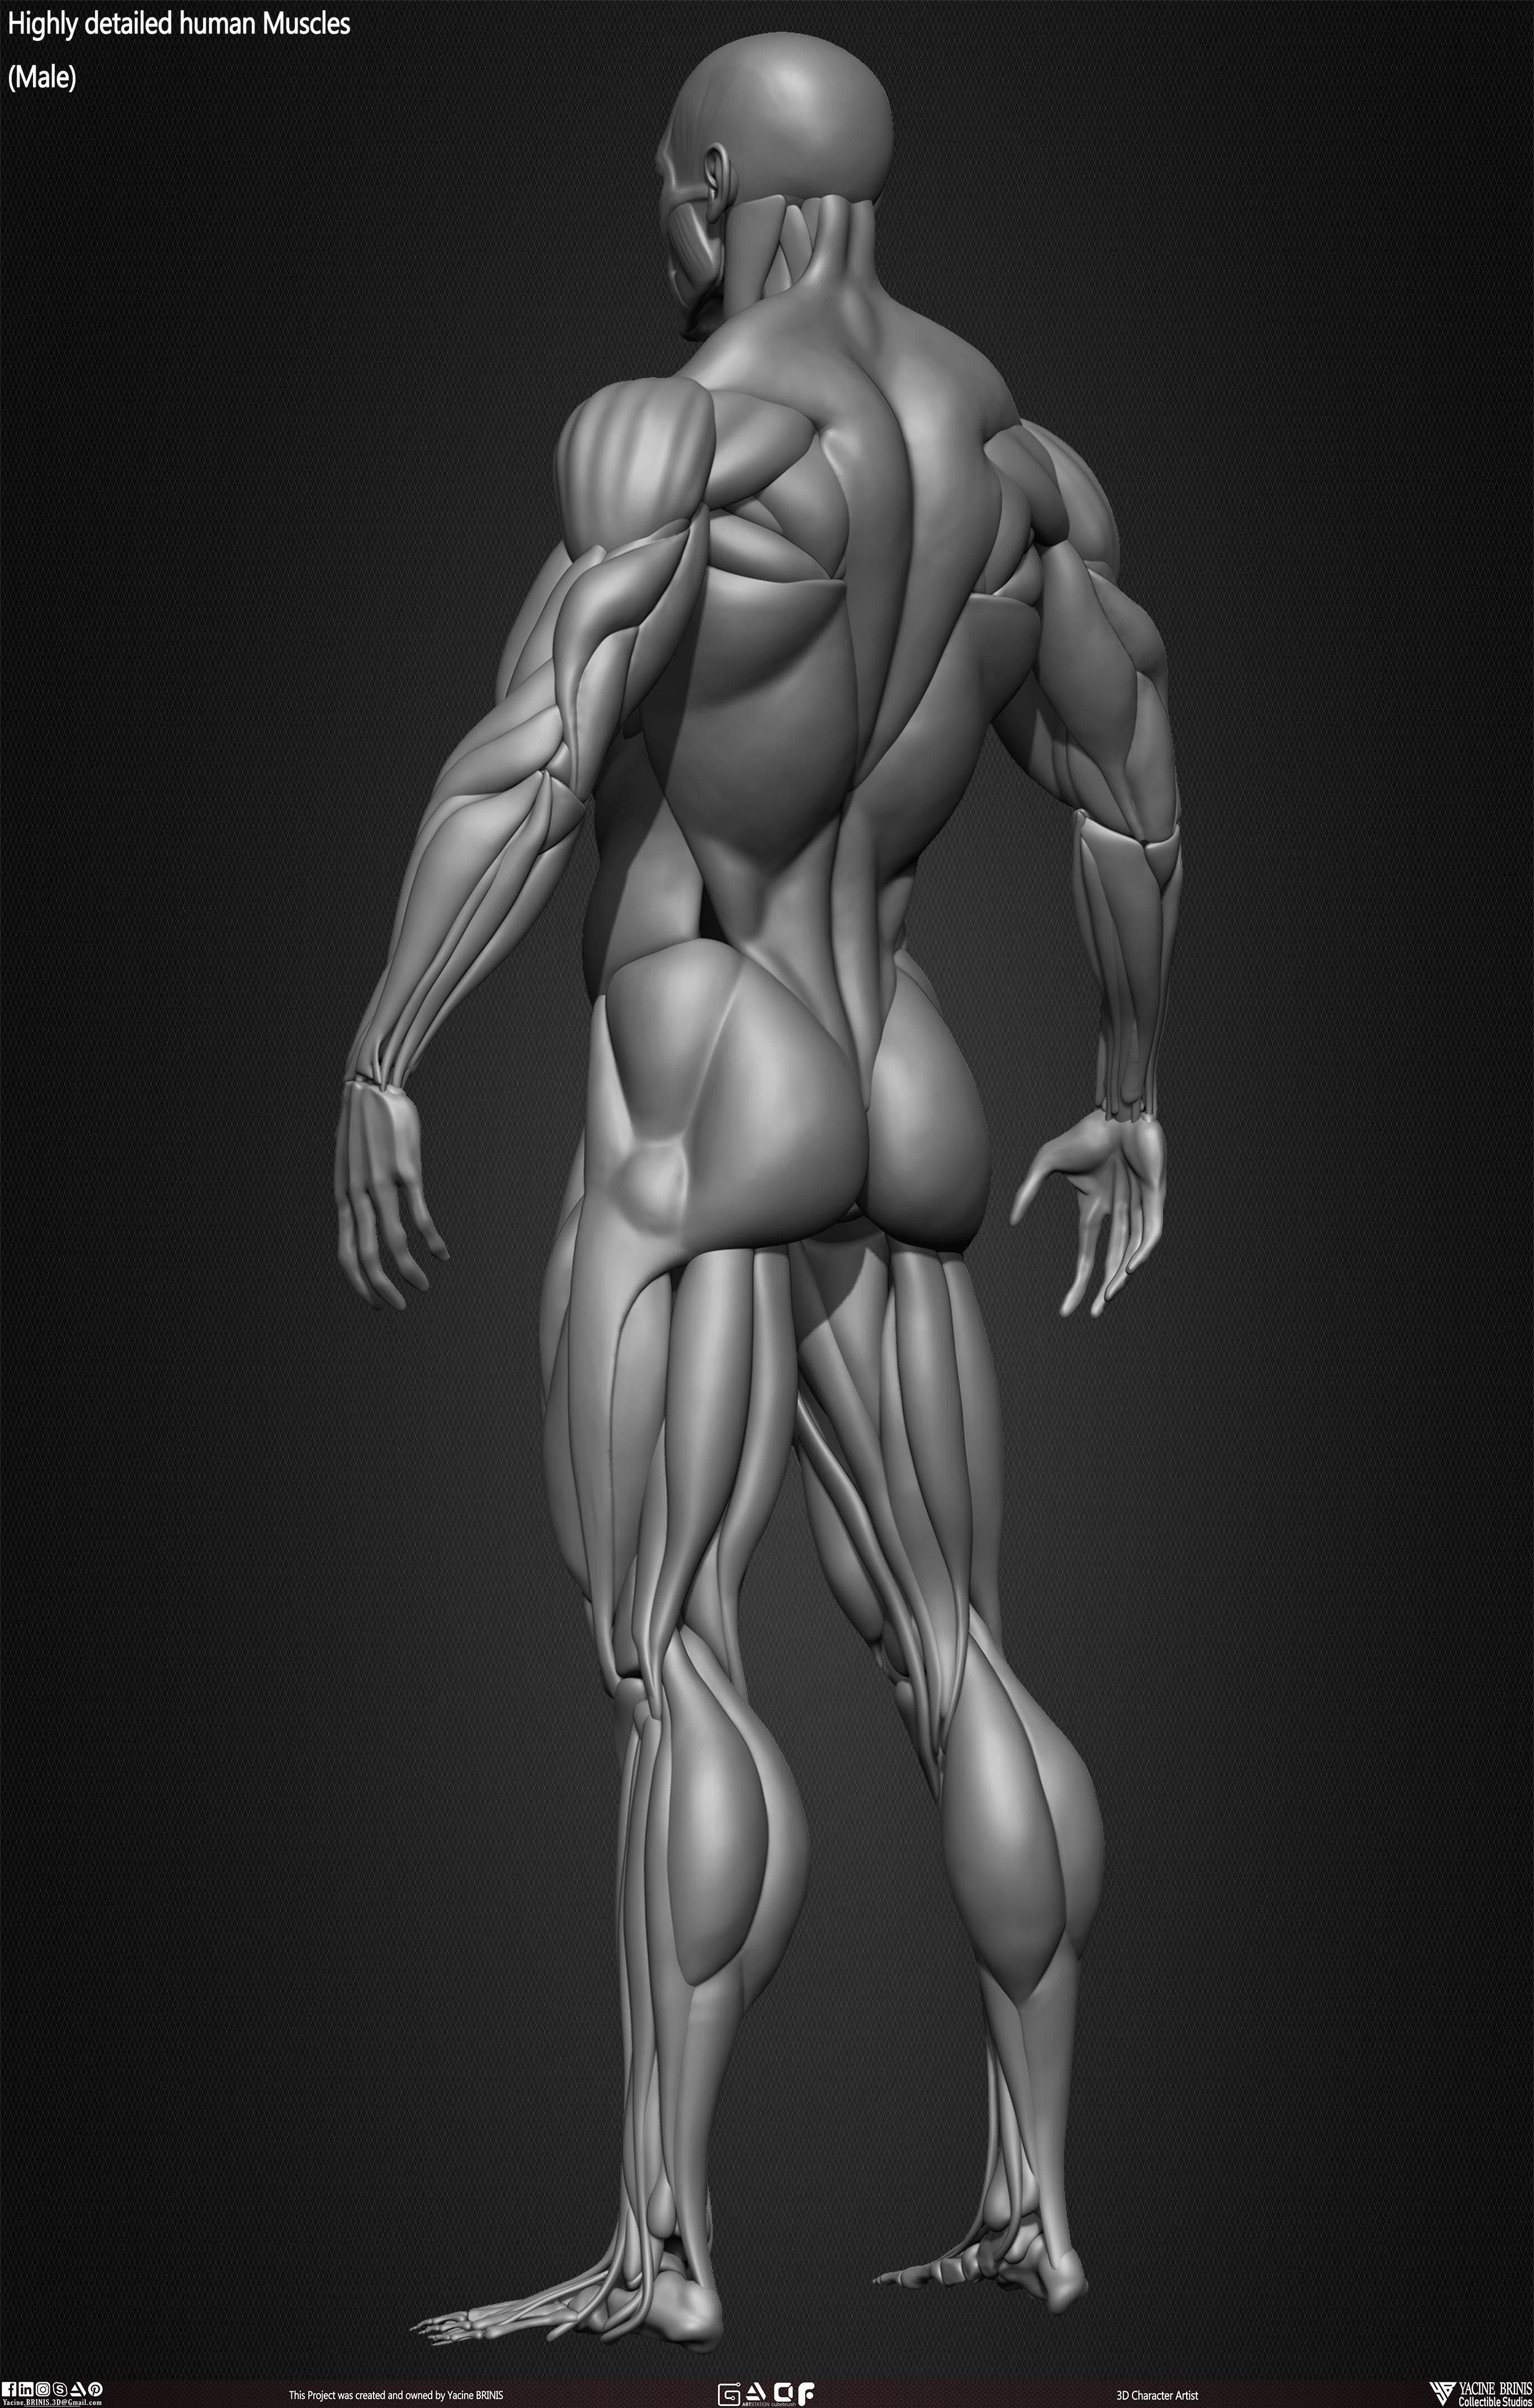 https://cdna.artstation.com/p/assets/images/images/055/981/584/4k/yacine-brinis-male-human-muscles-3d-model-sculpted-by-yacine-brinis-014.jpg?1668176829